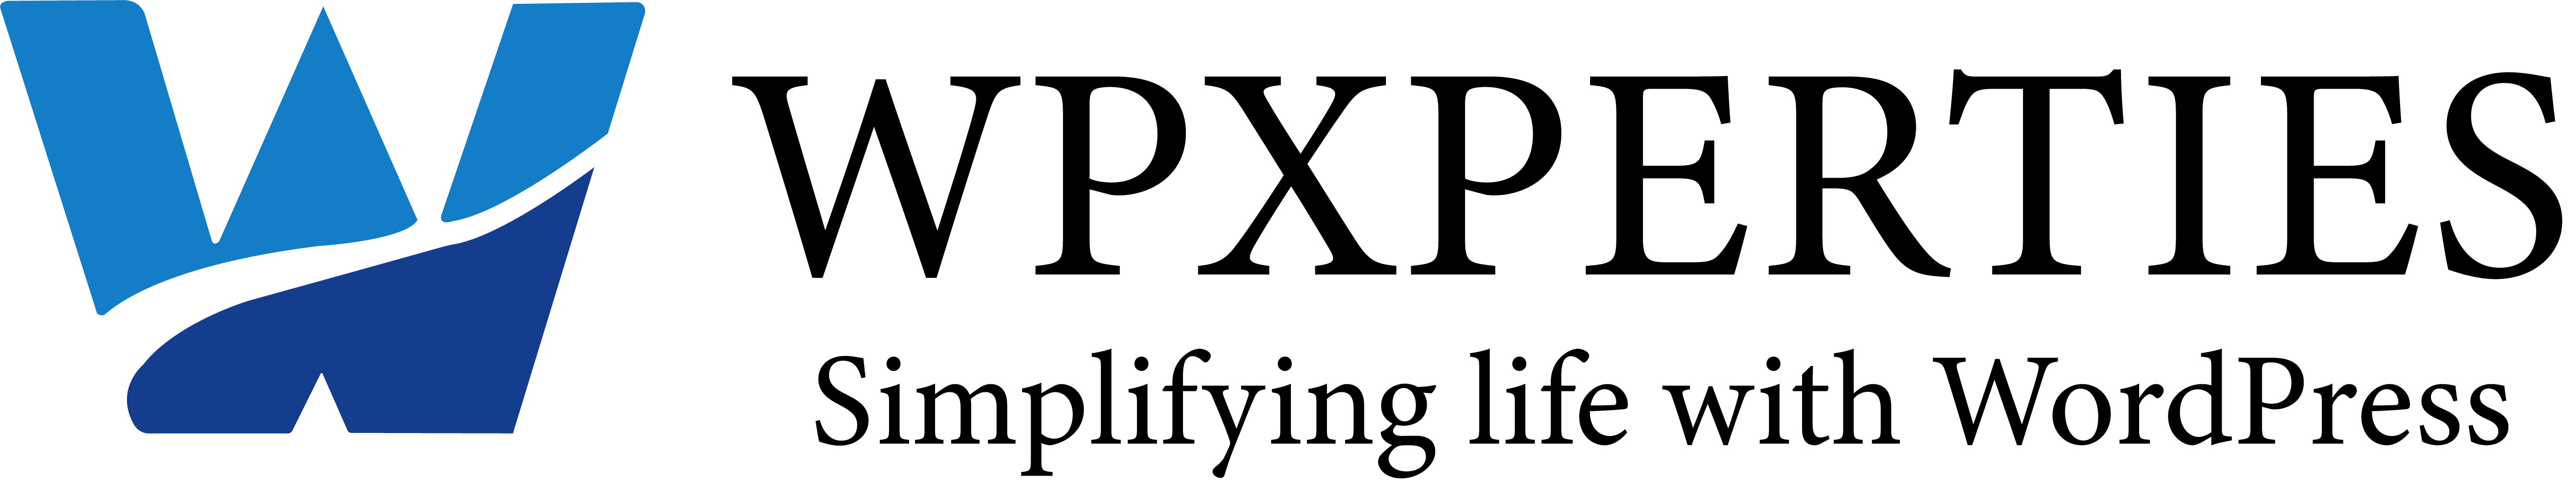 wpxperties logo